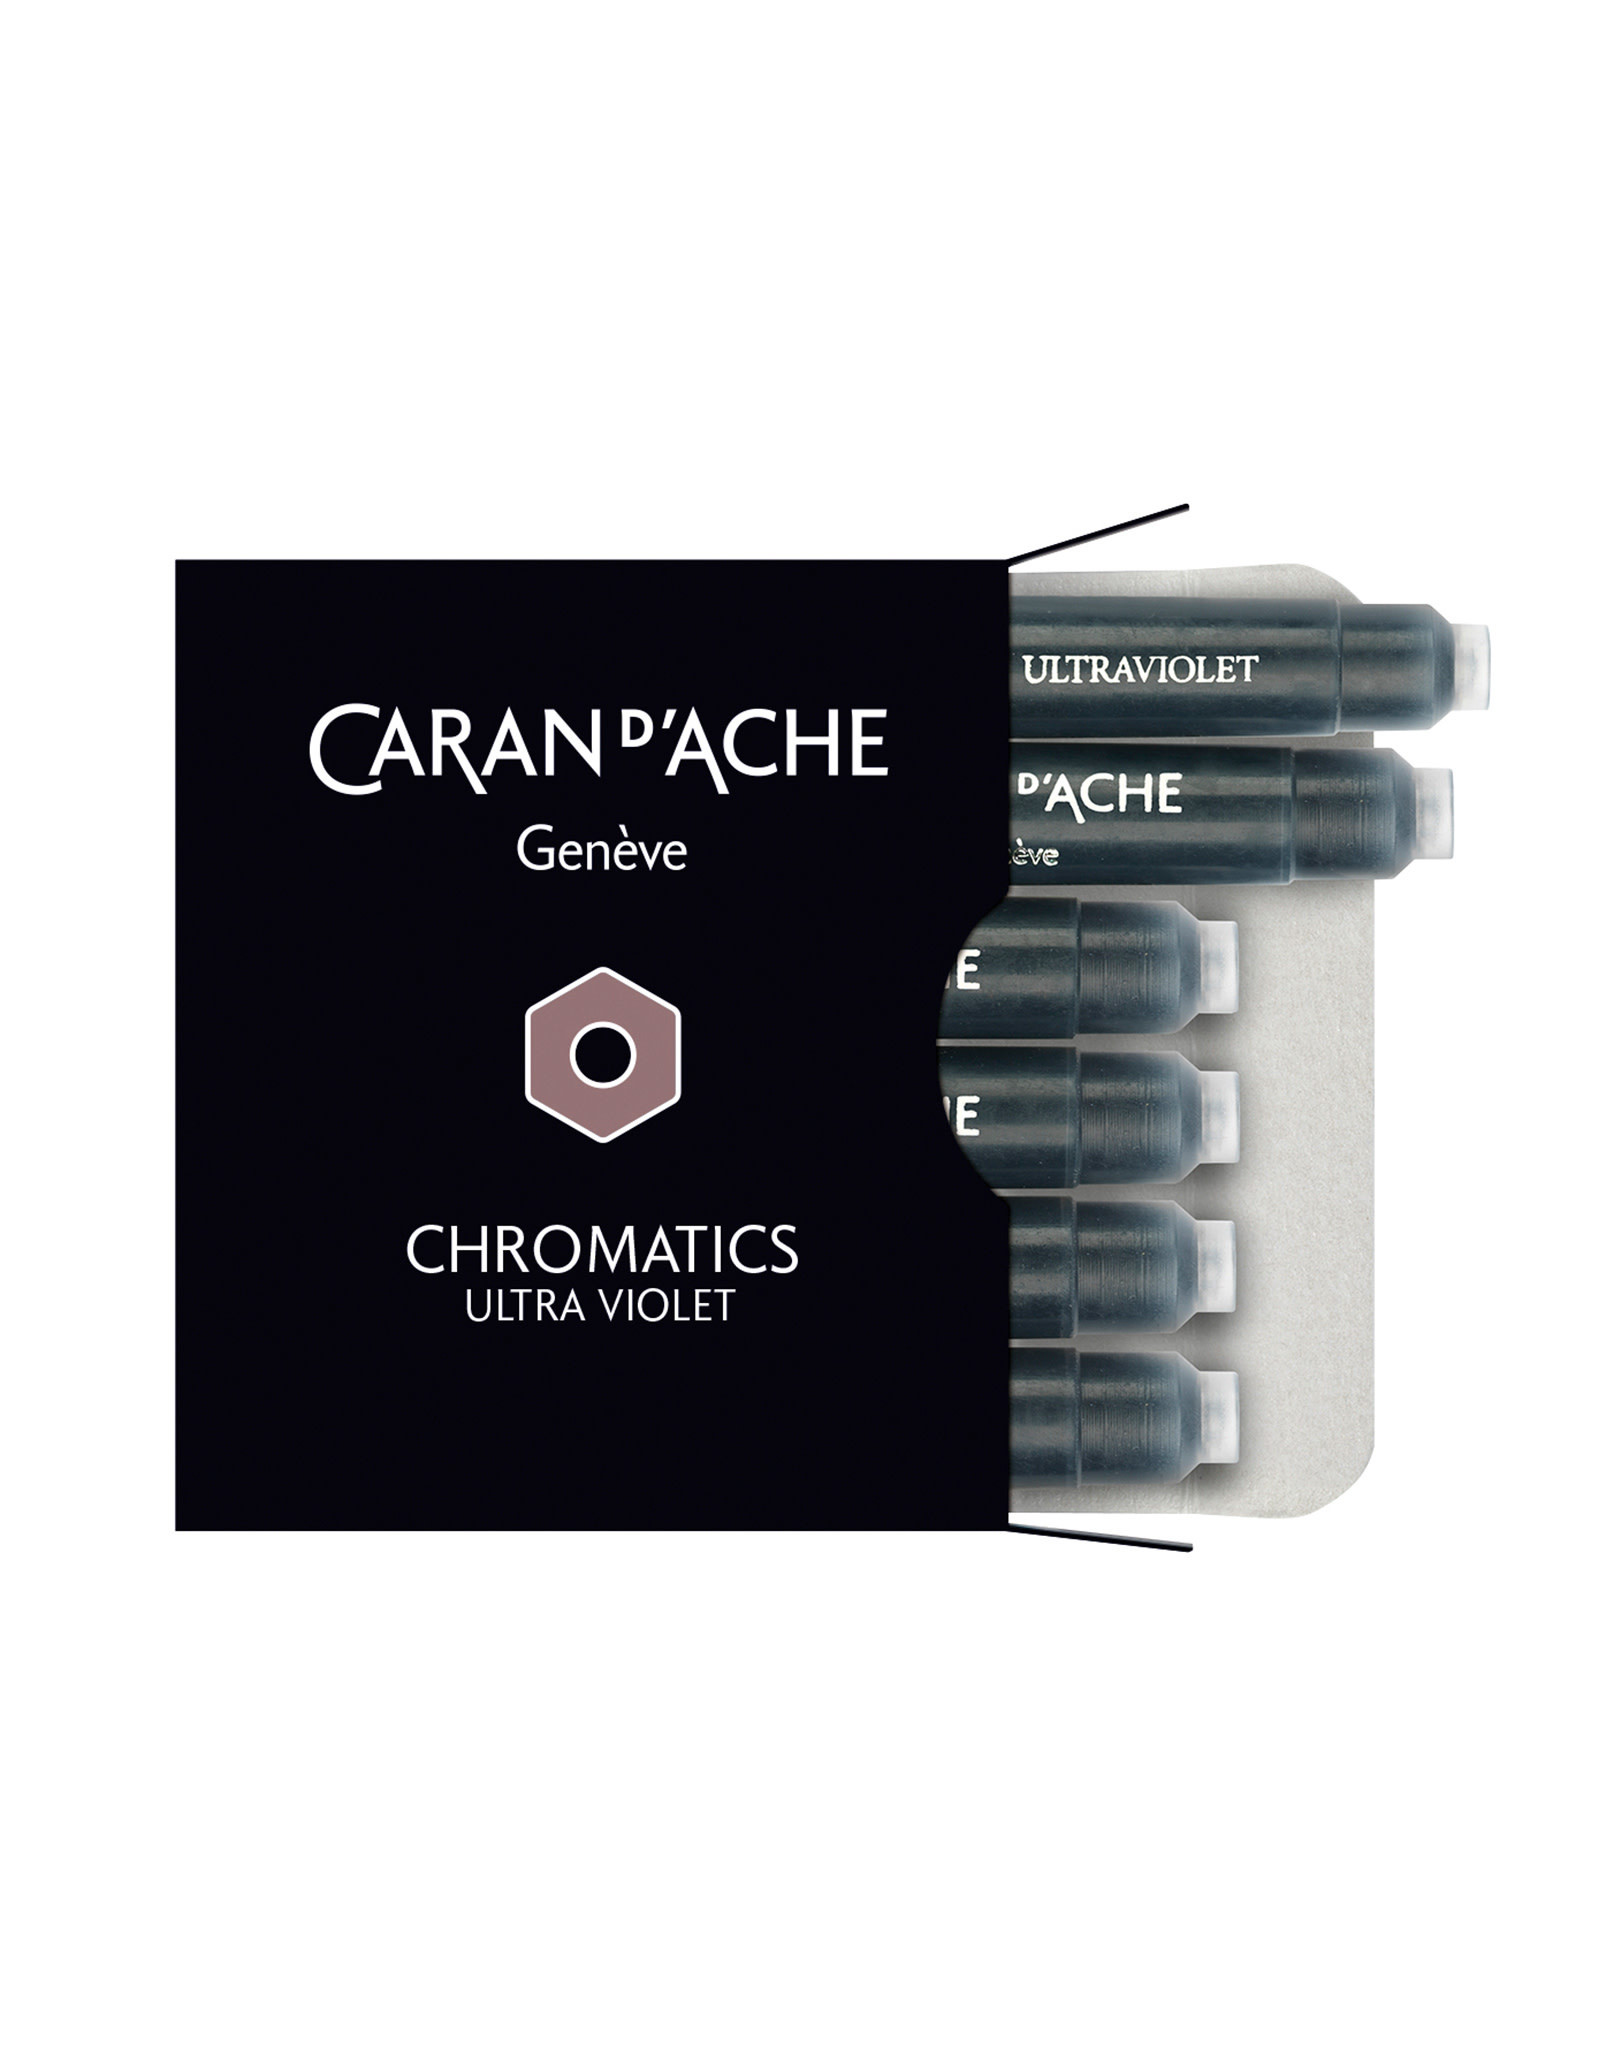 Caran d'Ache Caran D’Ache Chromatic Ink Cartridge, Ultraviolet